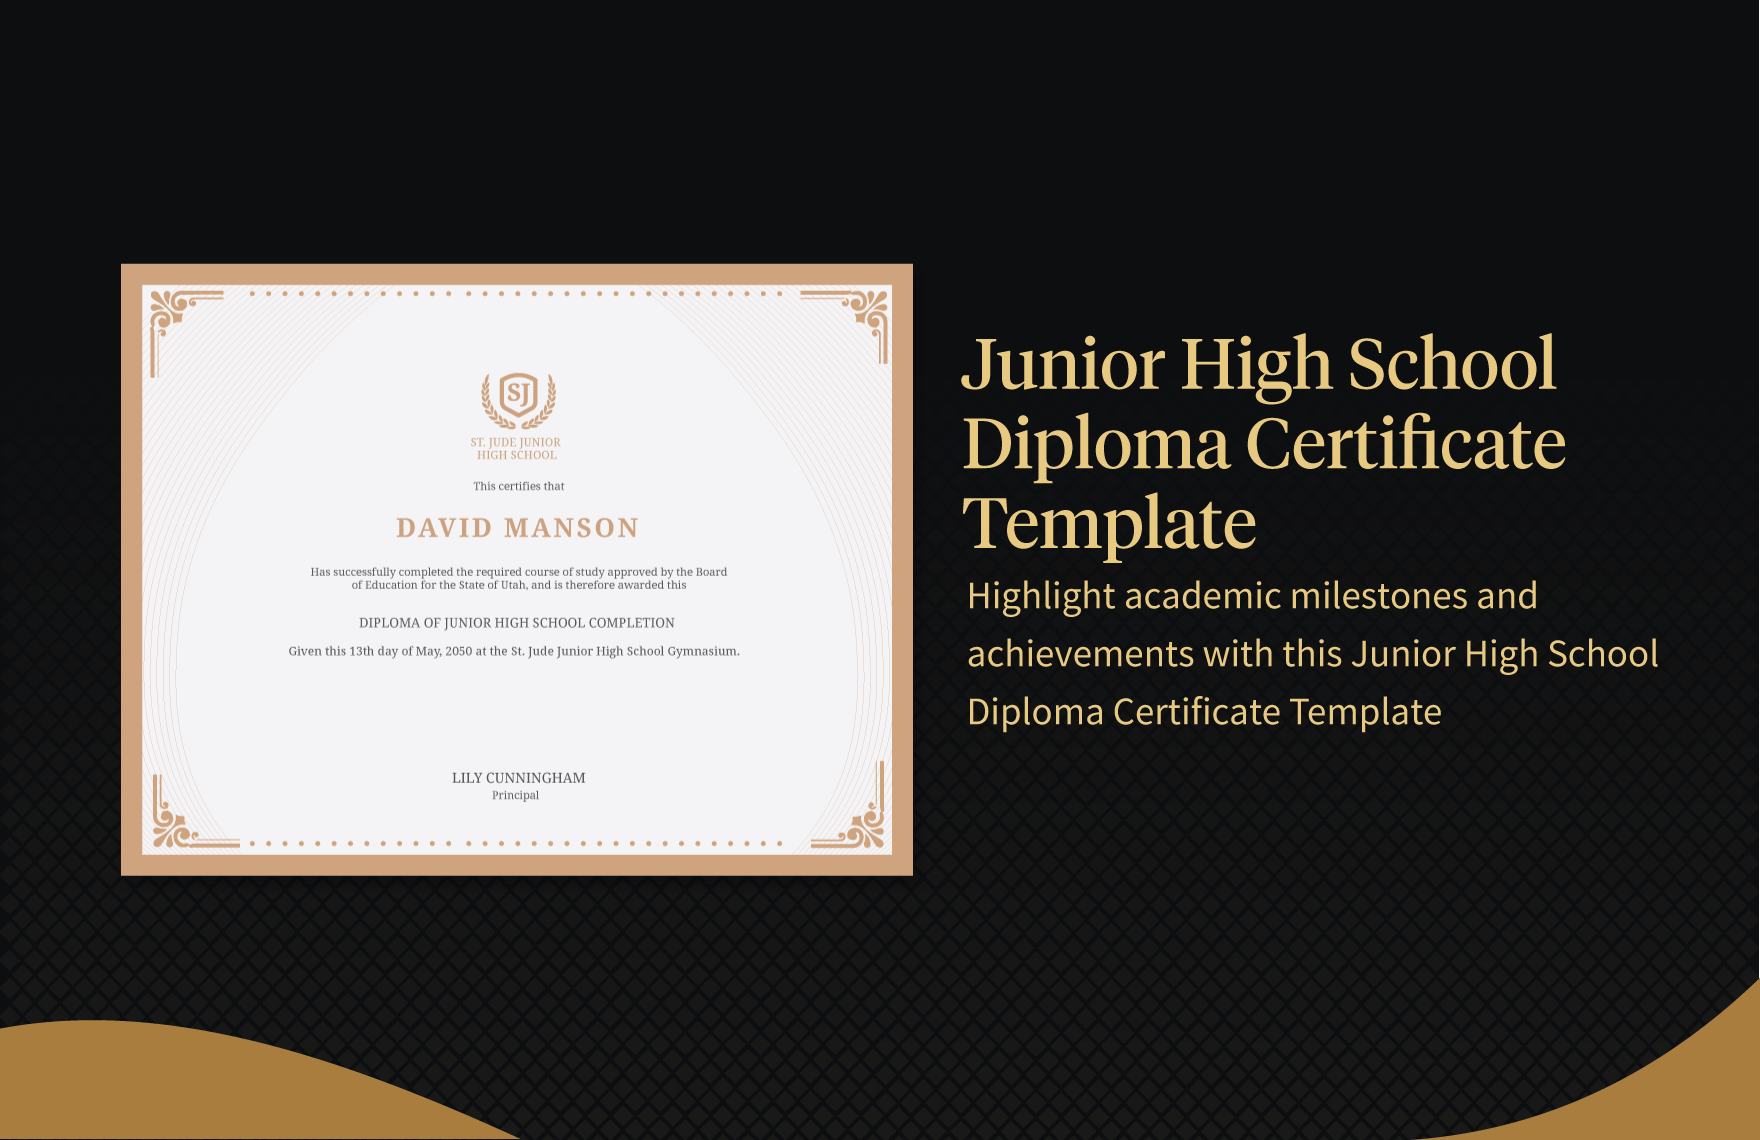 Junior High School Diploma Certificate Template